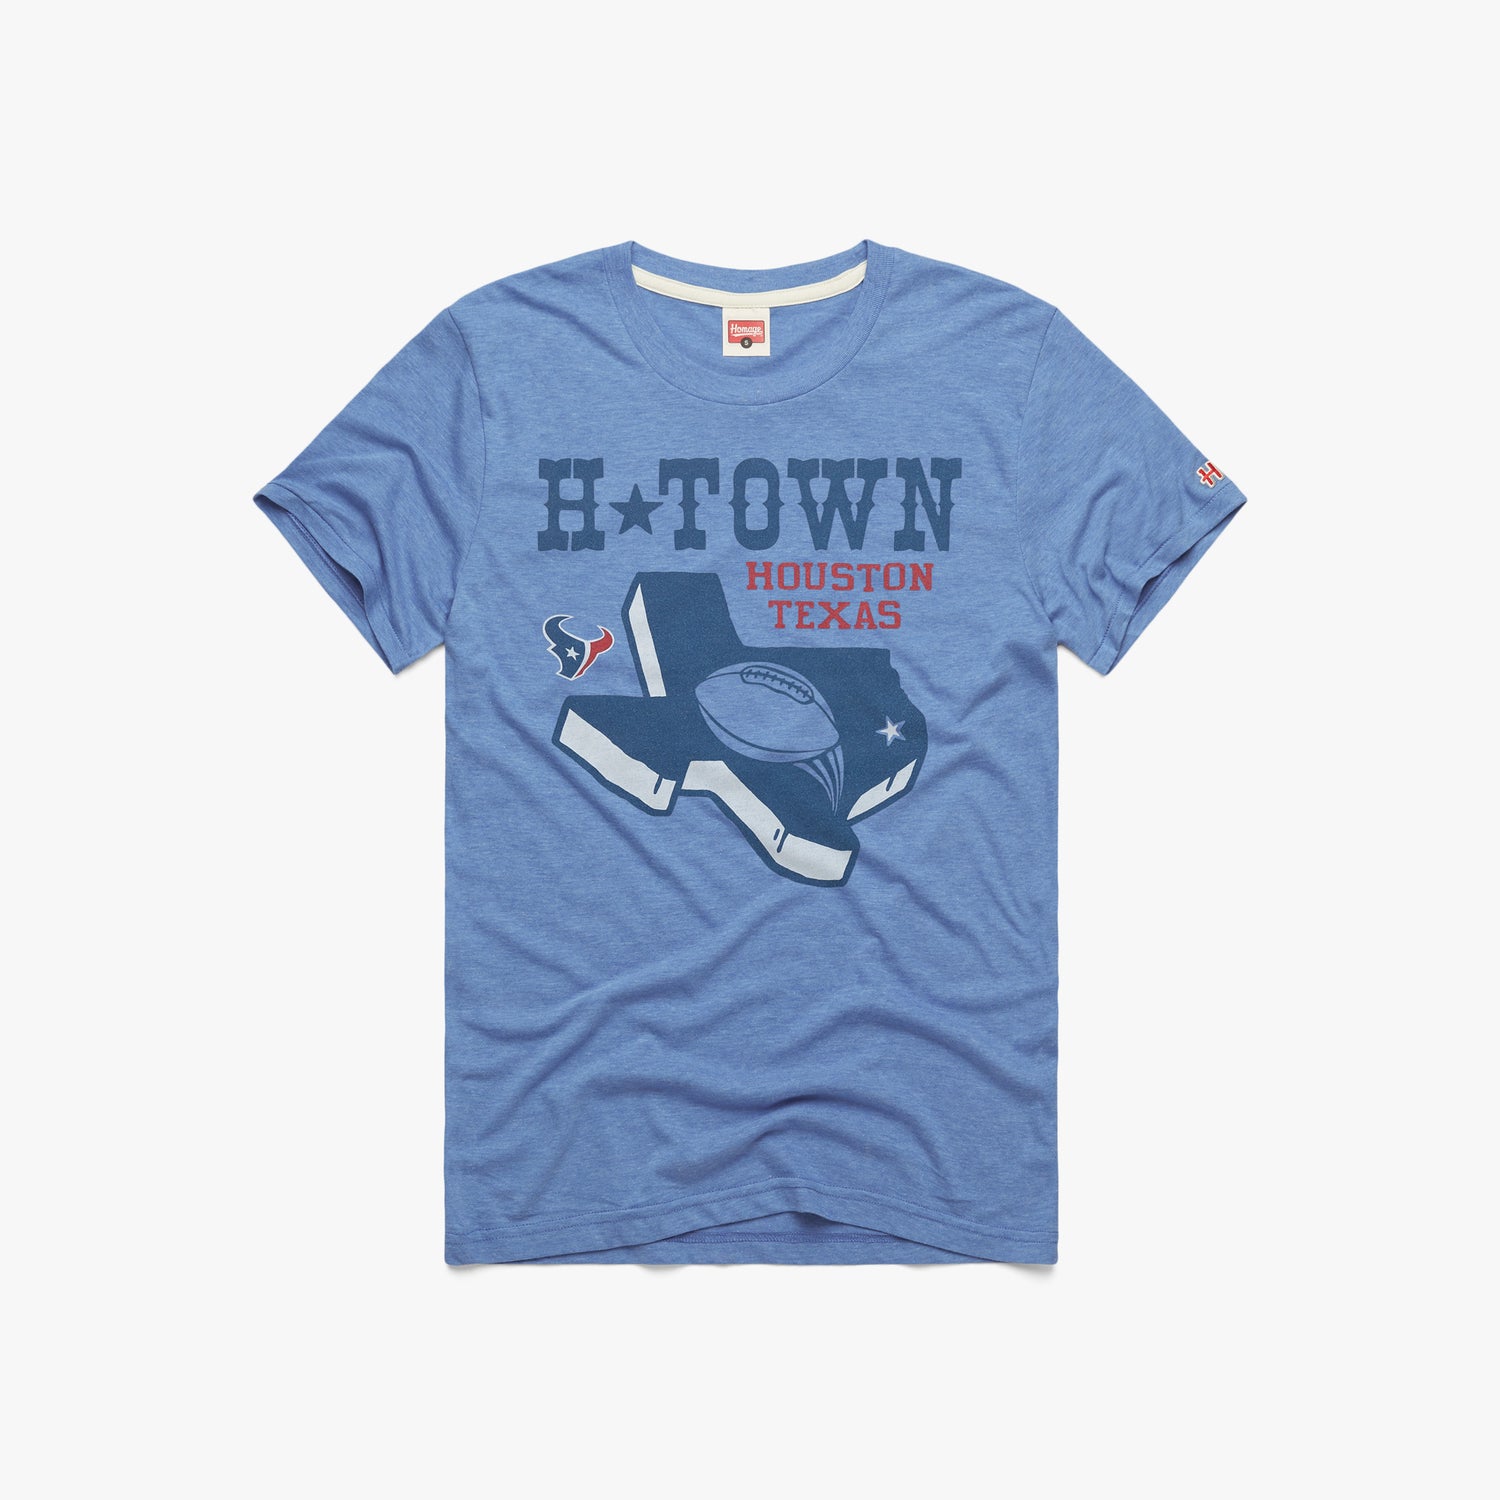 H-town Red Blue Retro Tshirt Rockets T-shirt Oilers Astros 